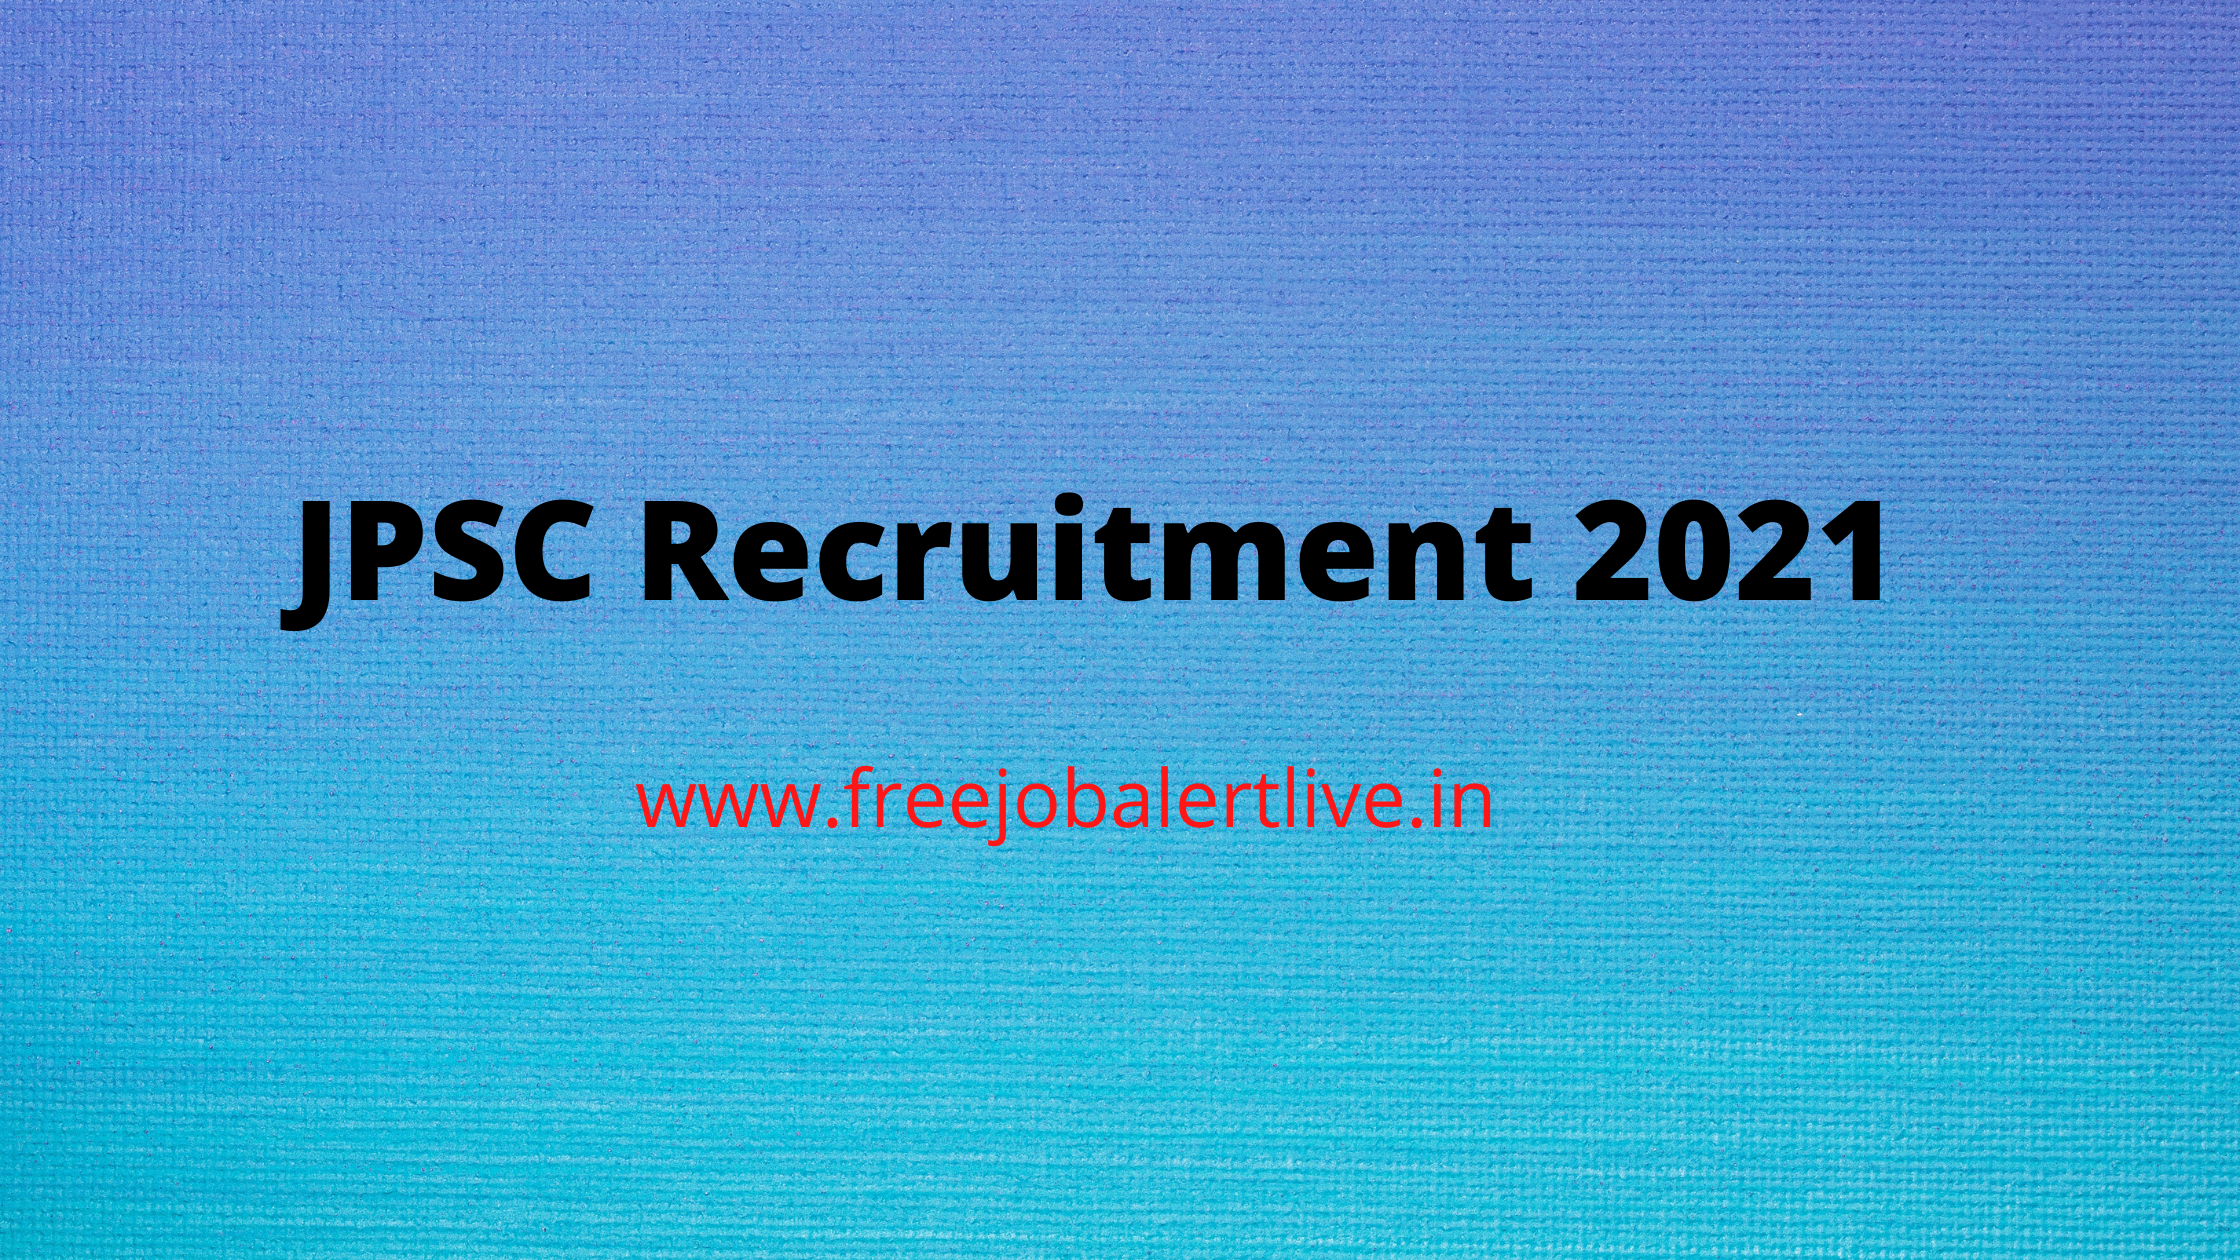 JPSC Recruitment 2021